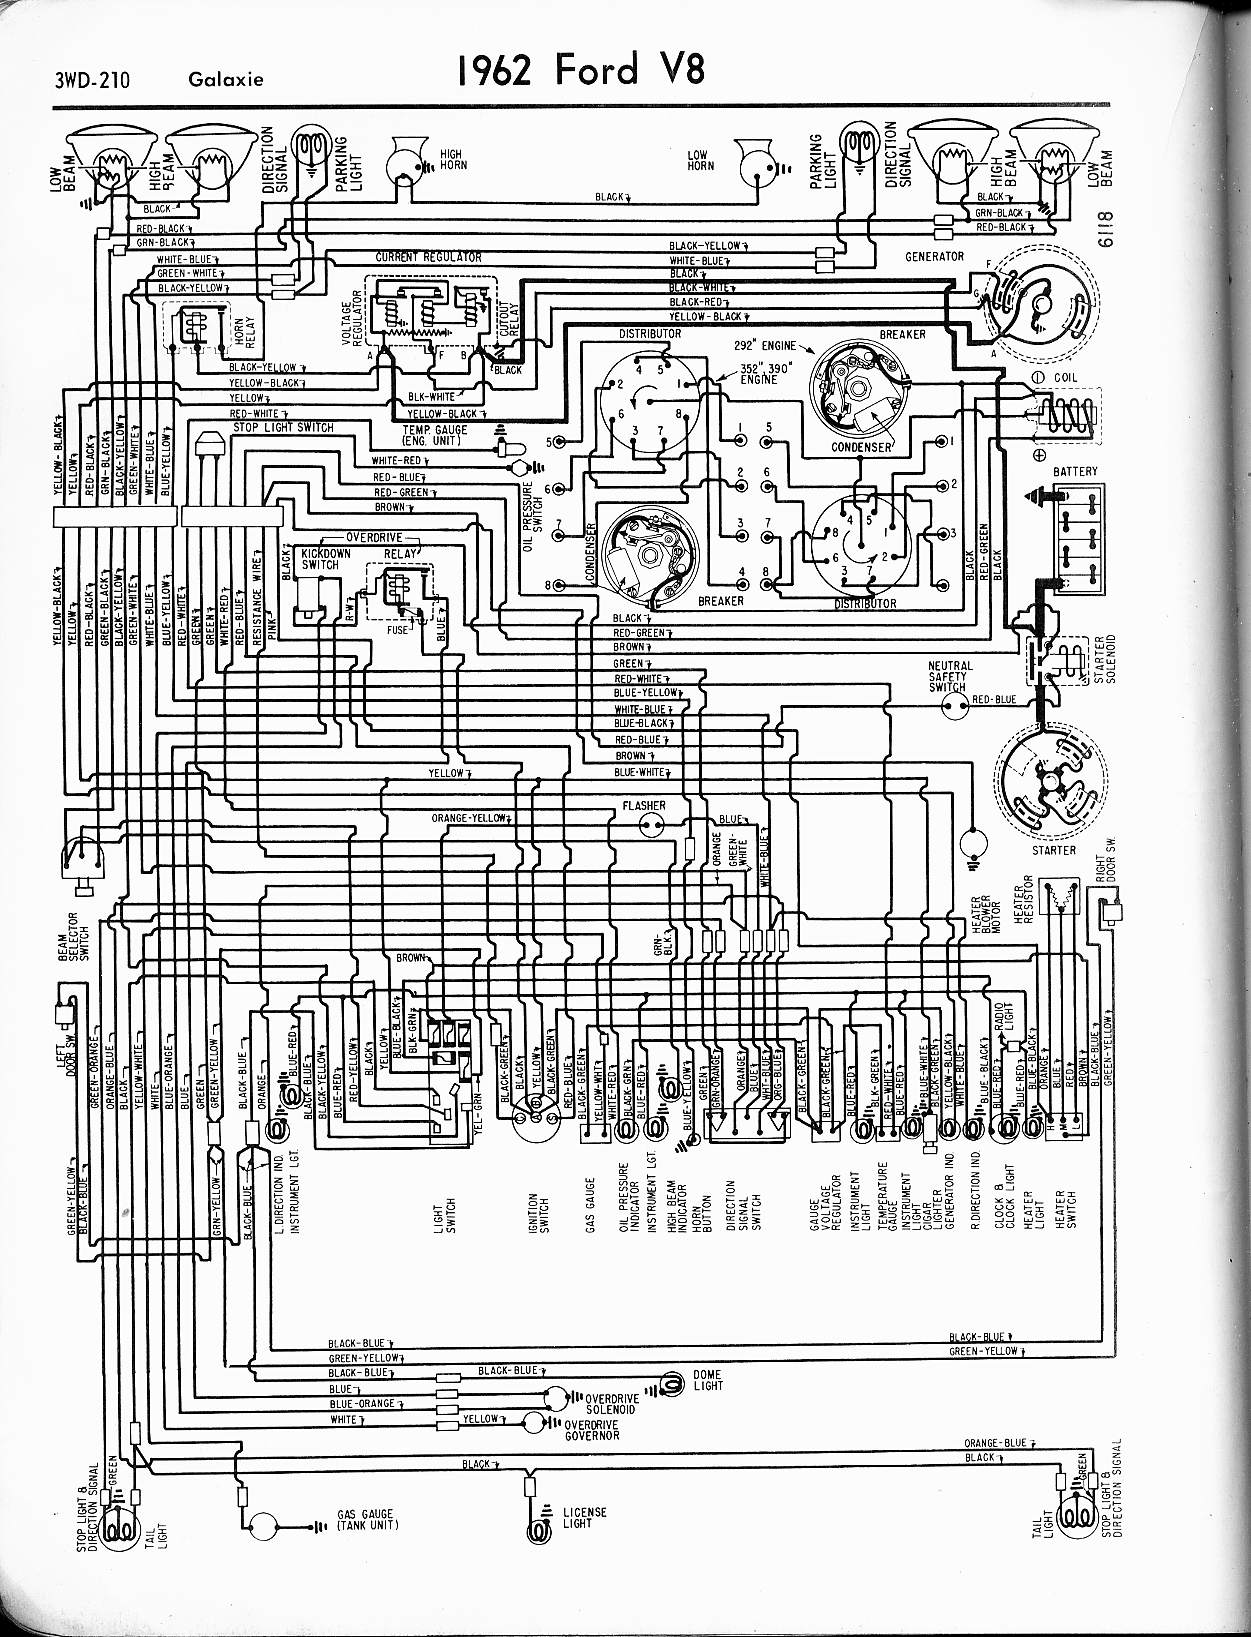 Printable ford wiring diagrams #2